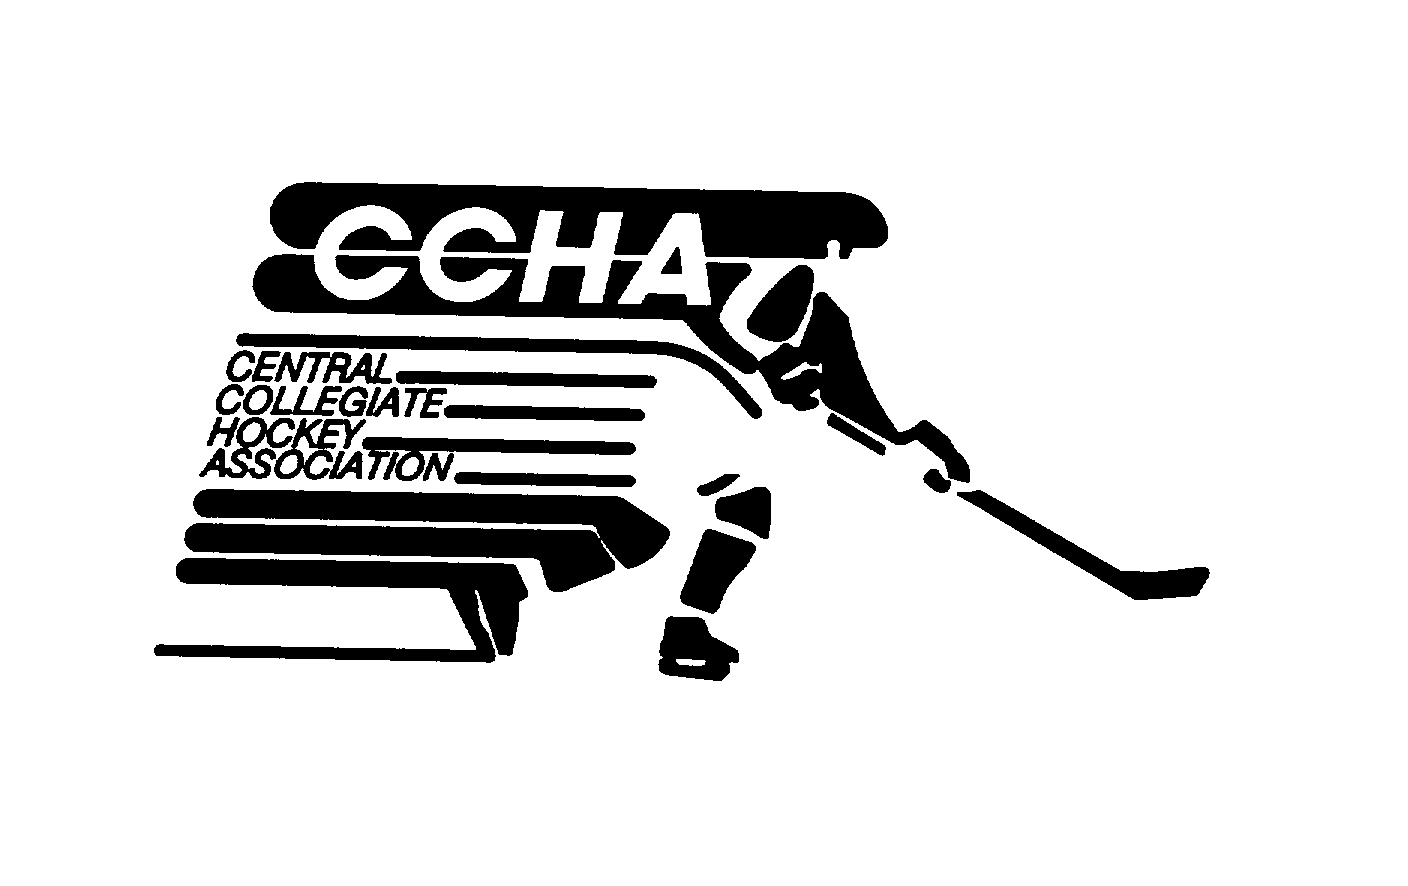  CCHA CENTRAL COLLEGIATE HOCKEY ASSOCIATION